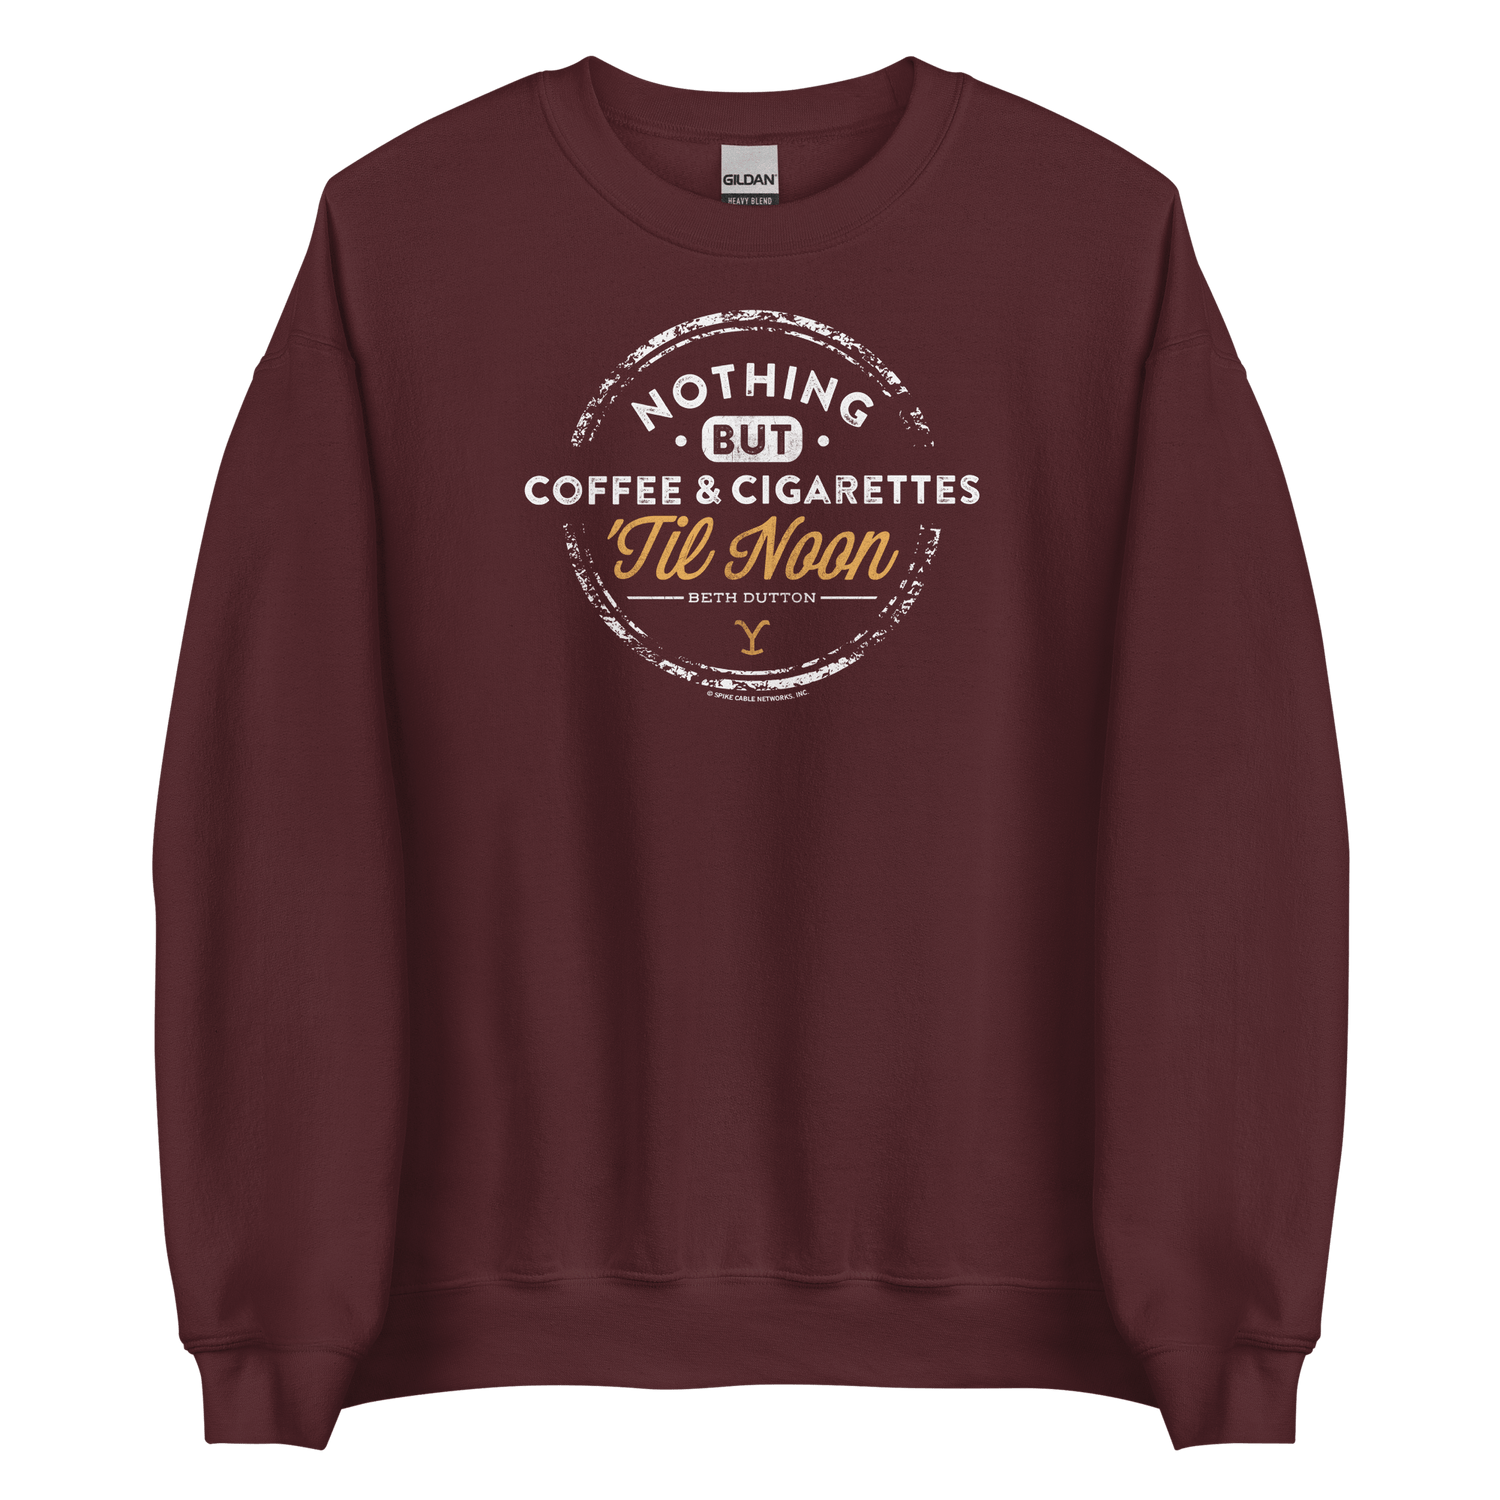 Yellowstone Nothing But Coffee & Cigarettes 'Til Noon Fleece Crewneck Sweatshirt - Paramount Shop